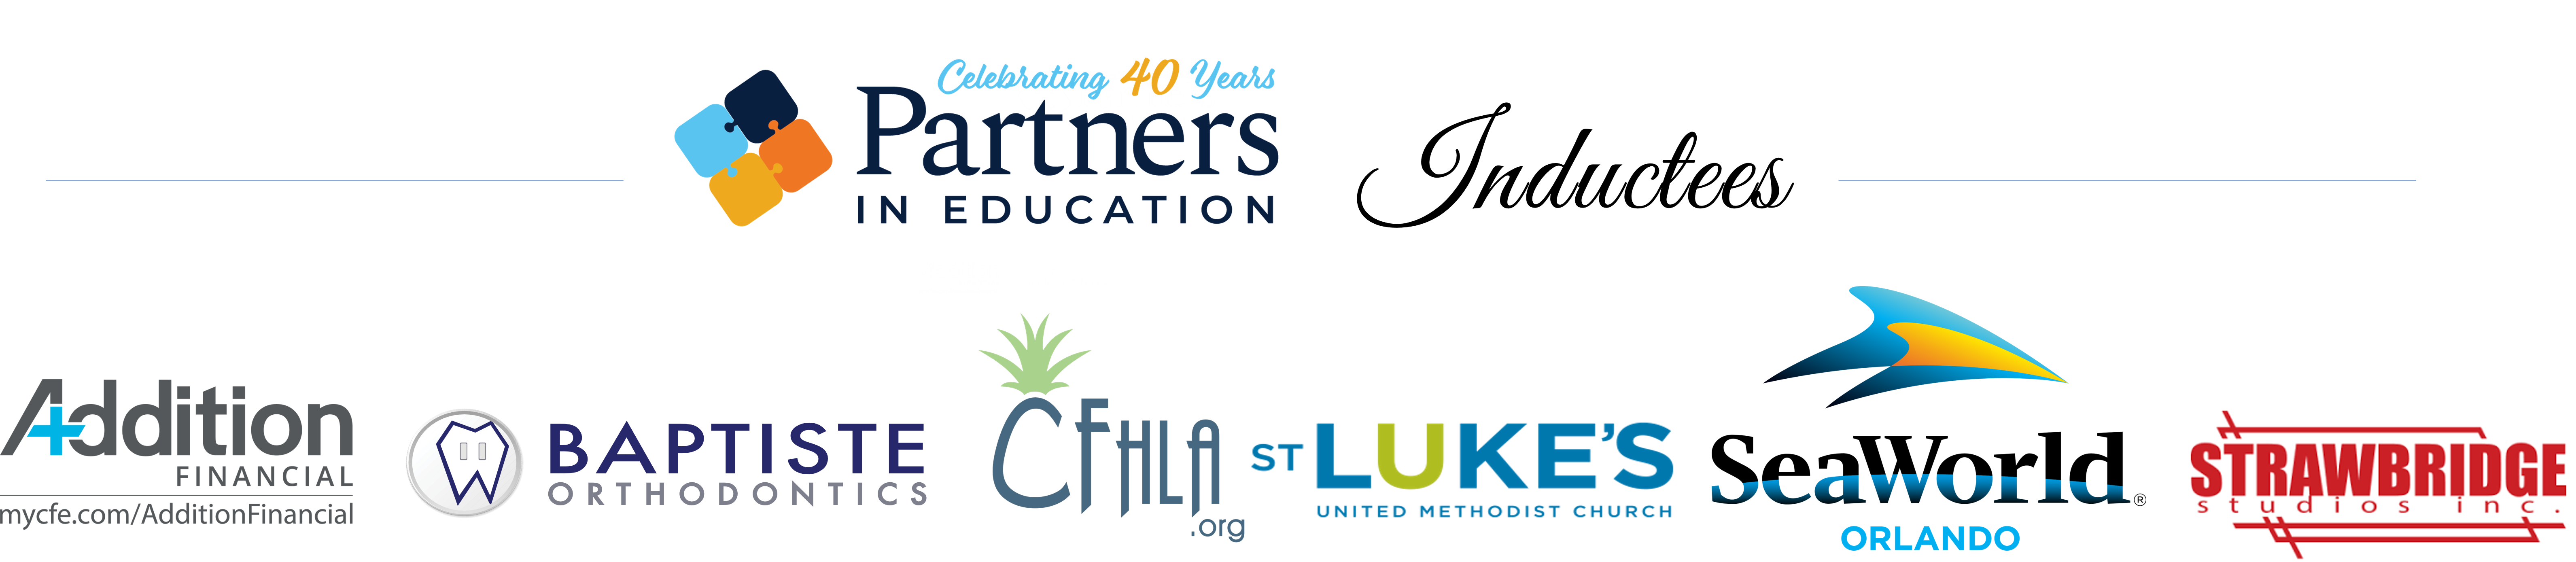 Logos of Addition Financial, Baptiste CFHLA.org St. Luke's, SeaWorld and Strawbridge